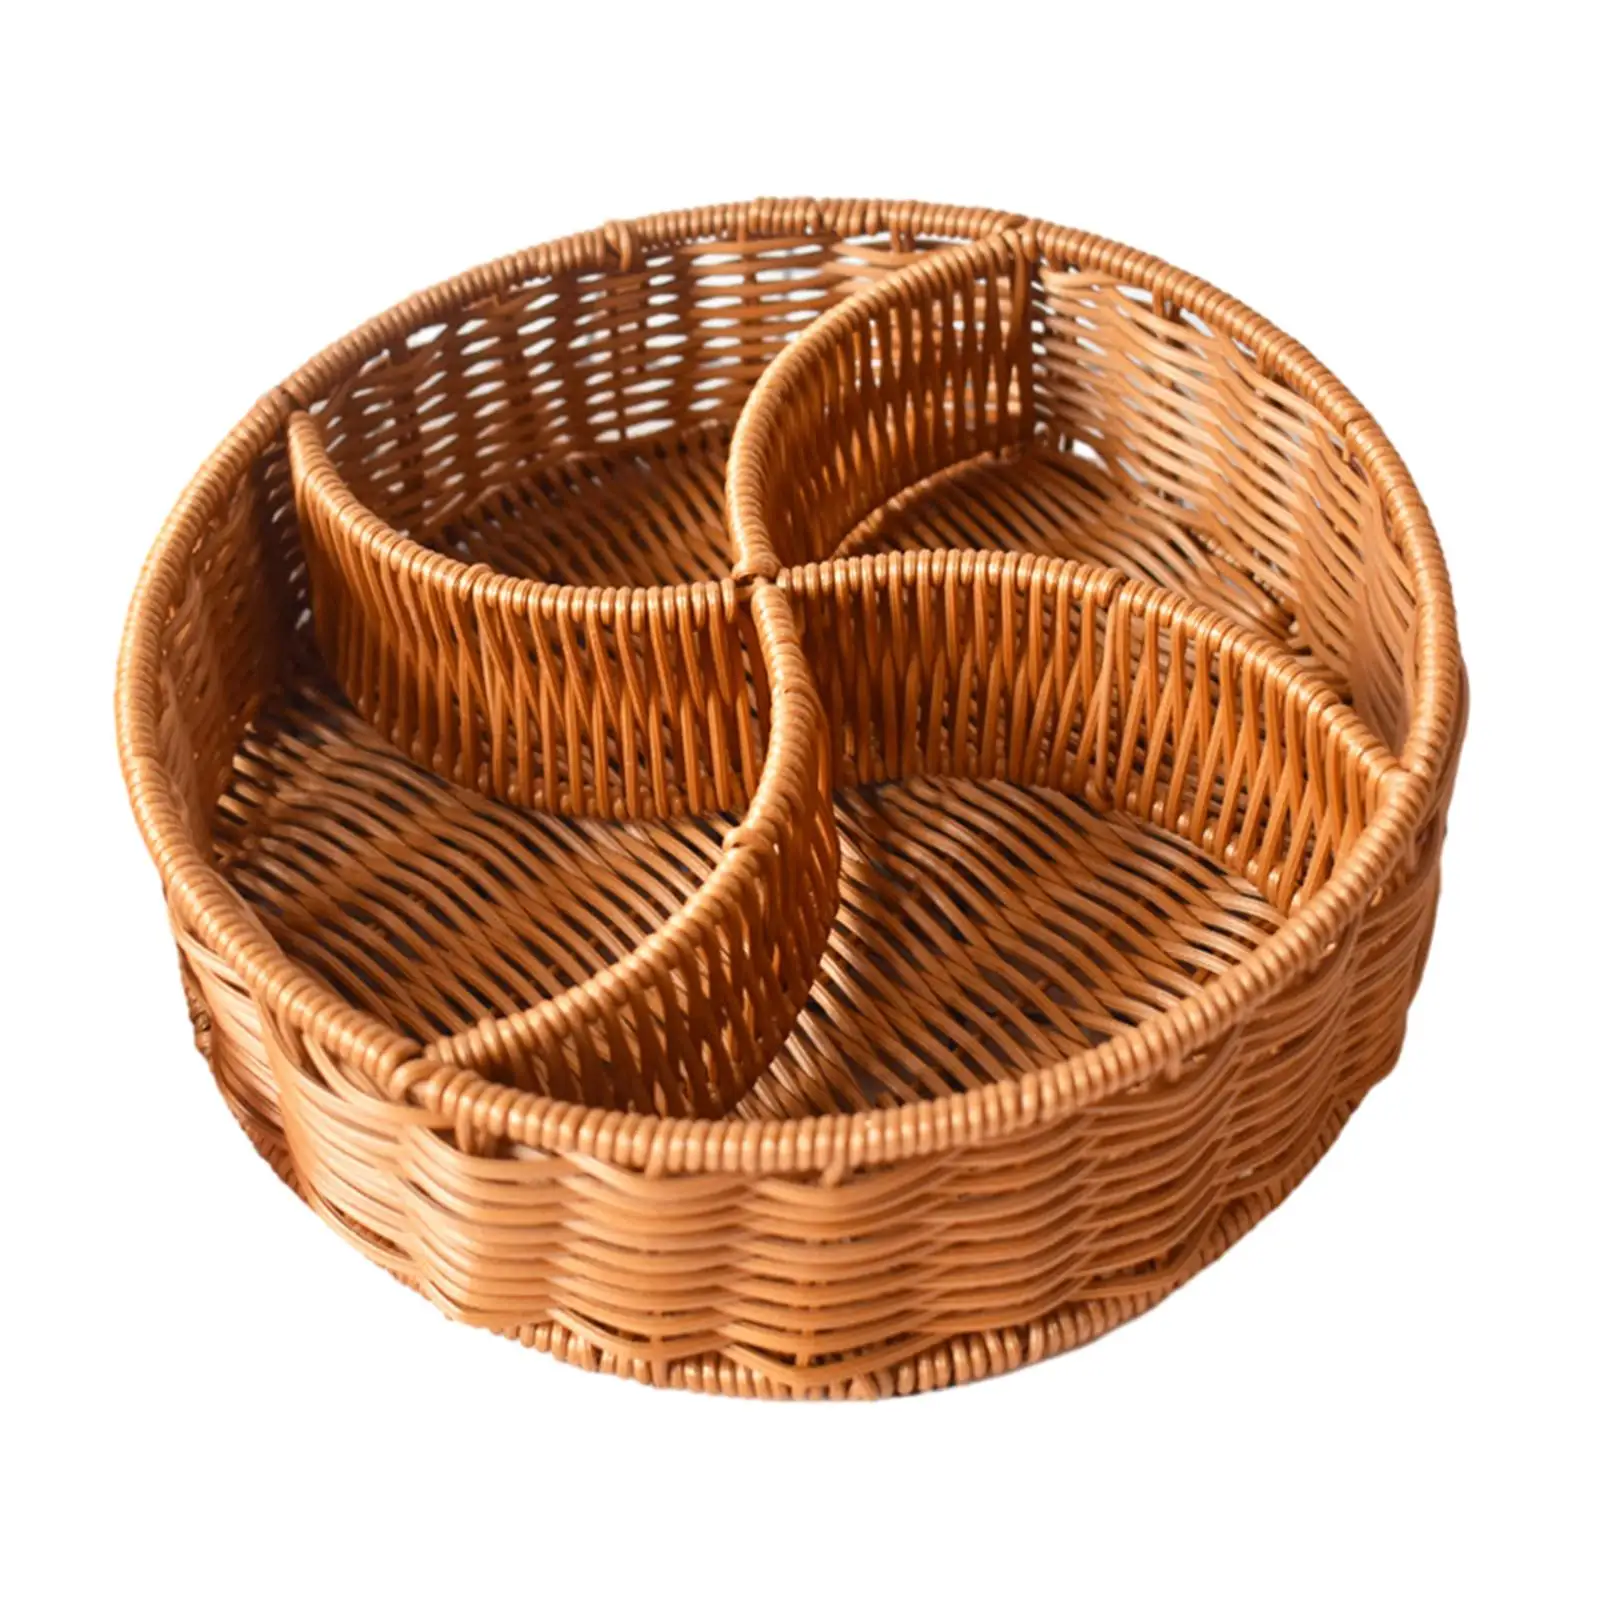 Hand Woven Serving Basket Handmade Divided Bread Basket Food Serving Holder for Restaurant Hotel Pantry Coffee Table Kitchen